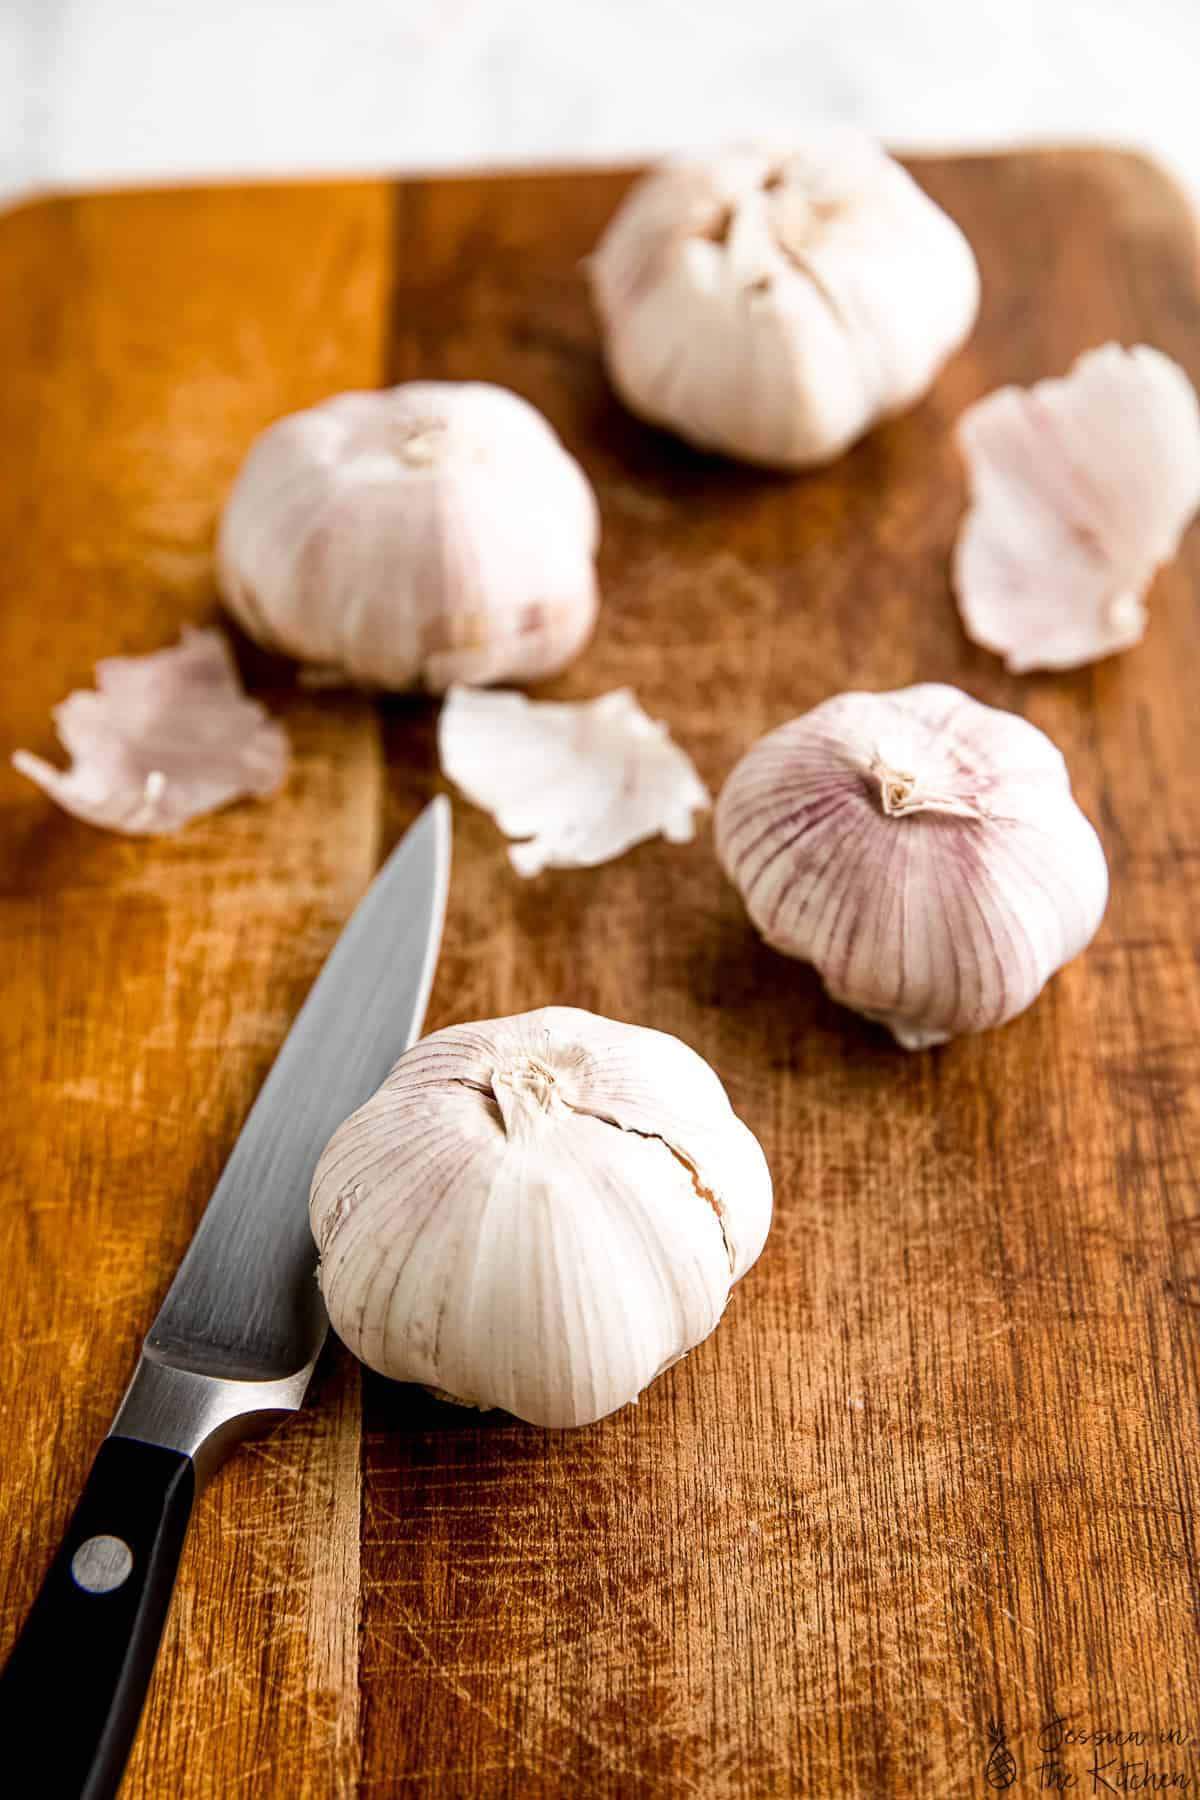 Bulbs of garlic on a wood board with a knife.